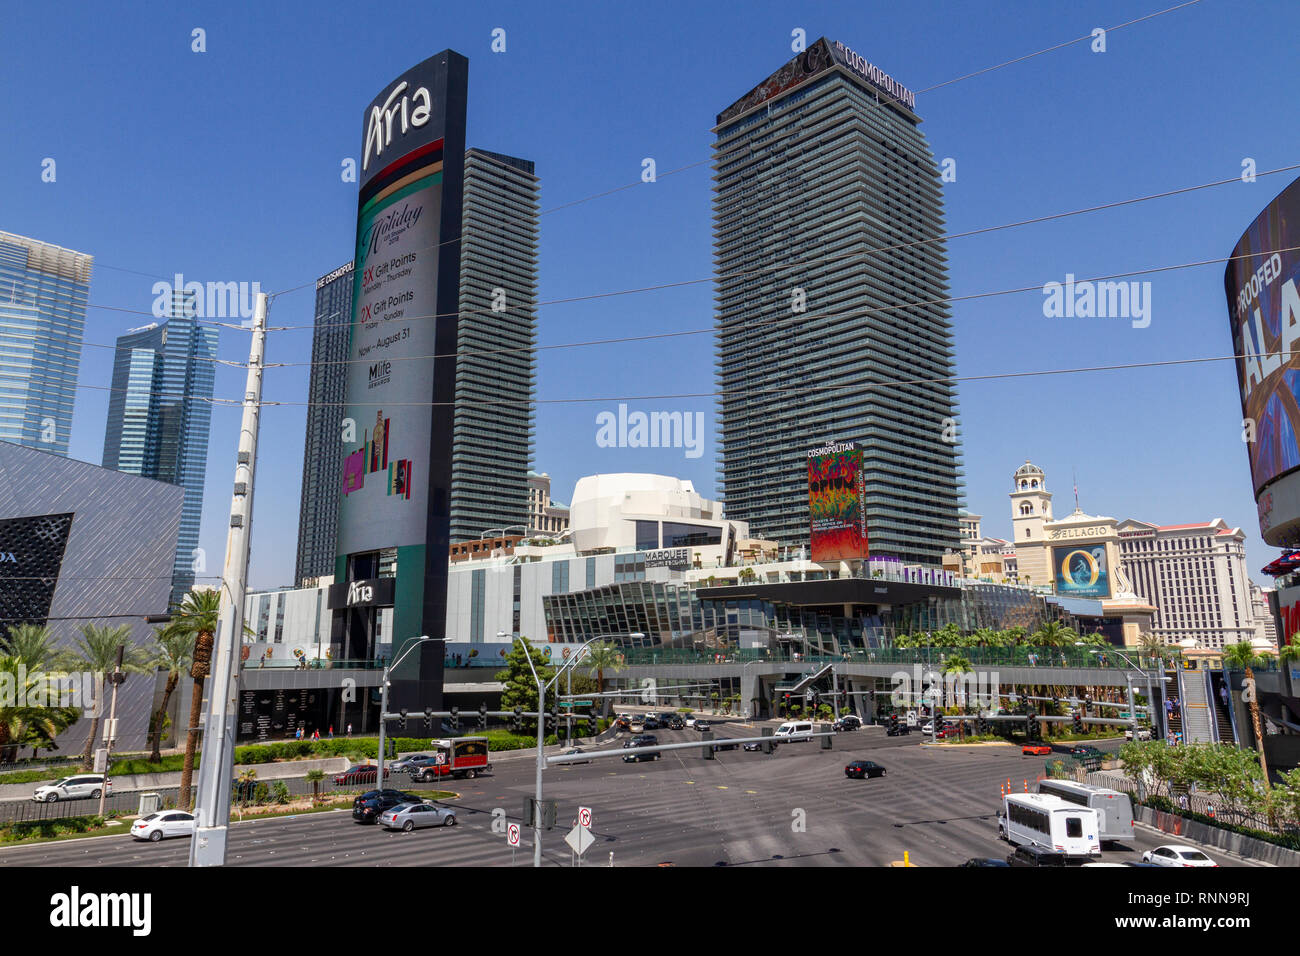 The Cosmopolitan Five Star hotel on The Strip, Las Vegas, Nevada, United States. Stock Photo